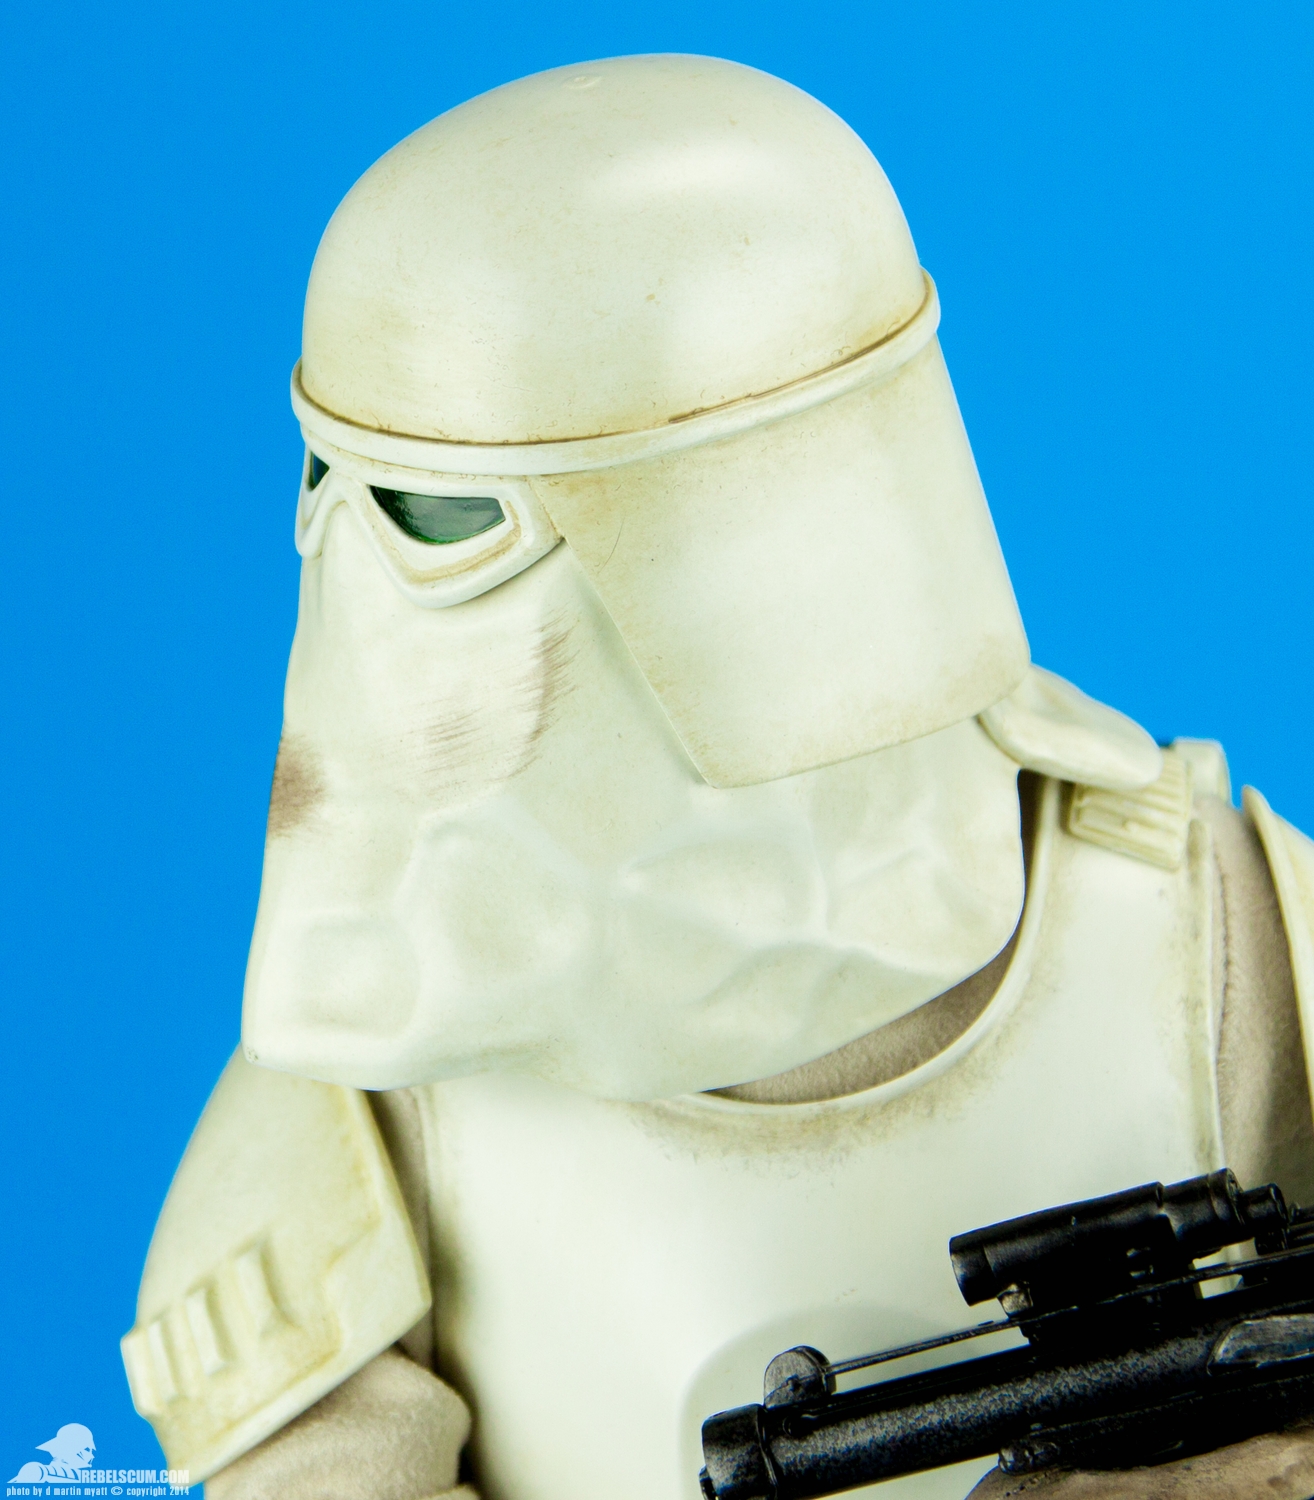 Snowtrooper-Premium-Format-Figure-Sideshow-Collectibles-007.jpg